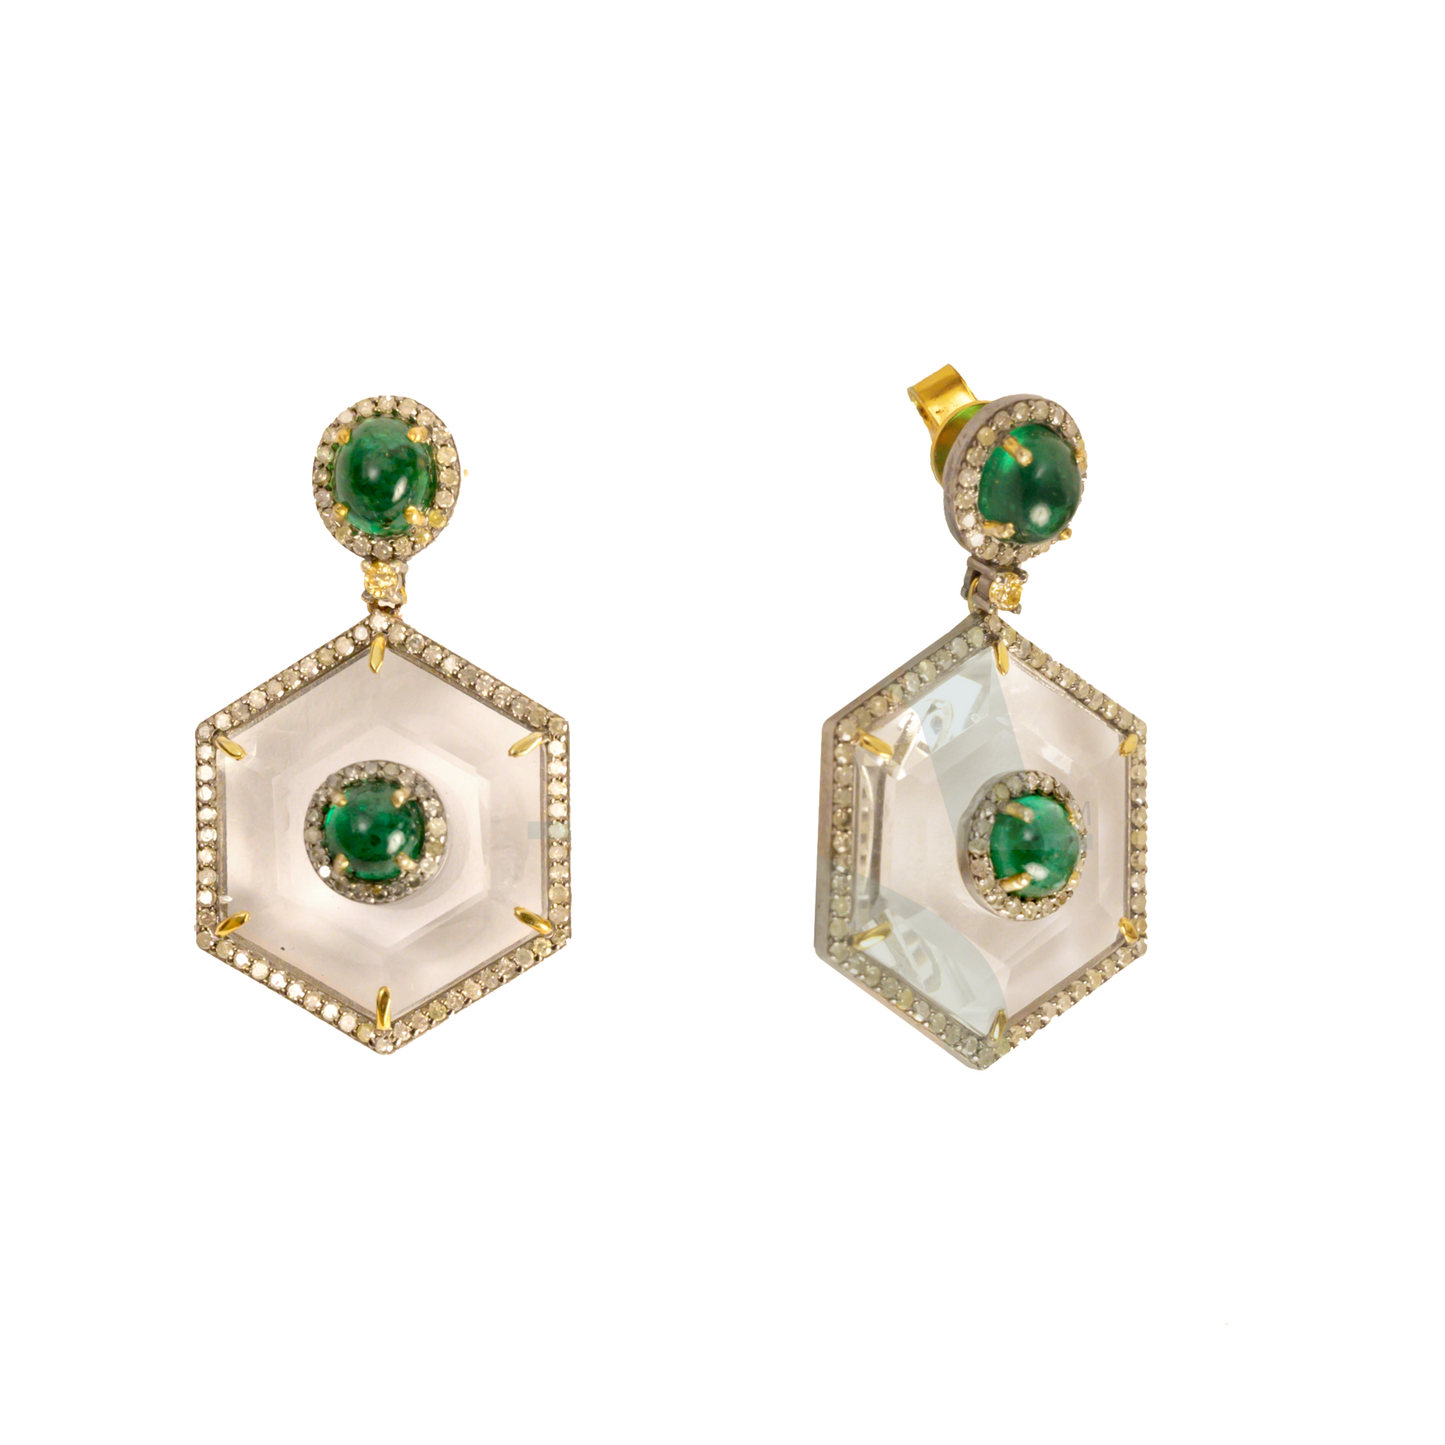 Marini Emerald and Crystal Earrings